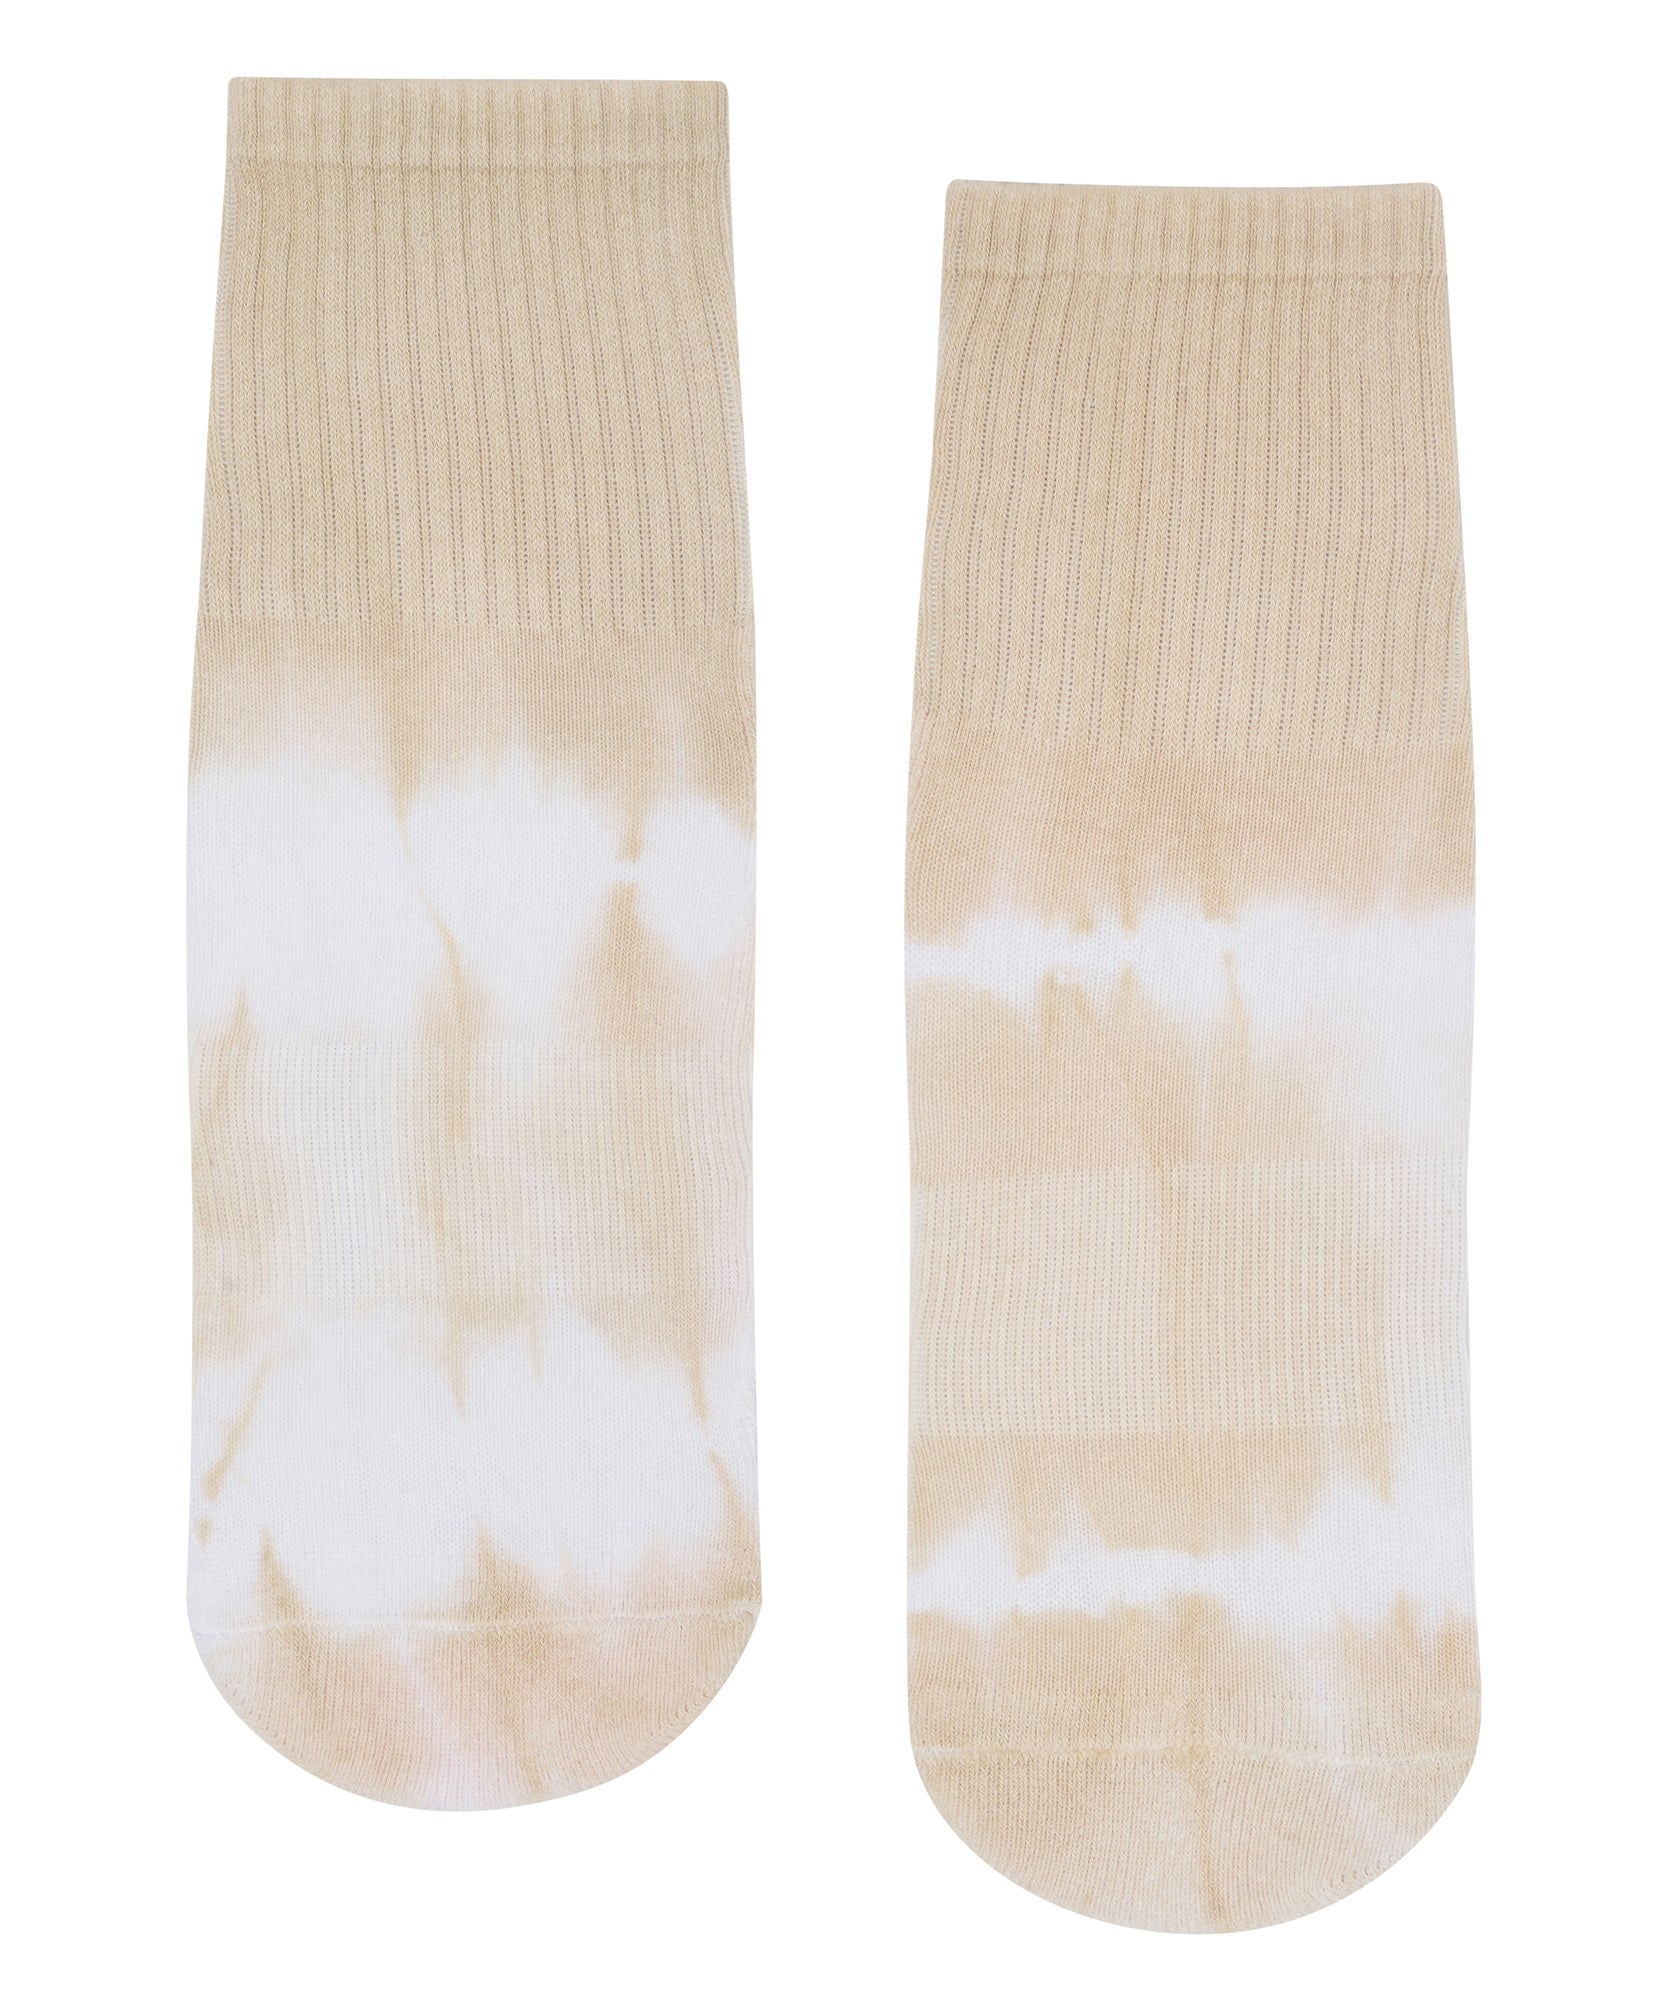 Oak and Reed Tie Dye Yoga Socks, Teal S/M, Small-Medium - Kroger